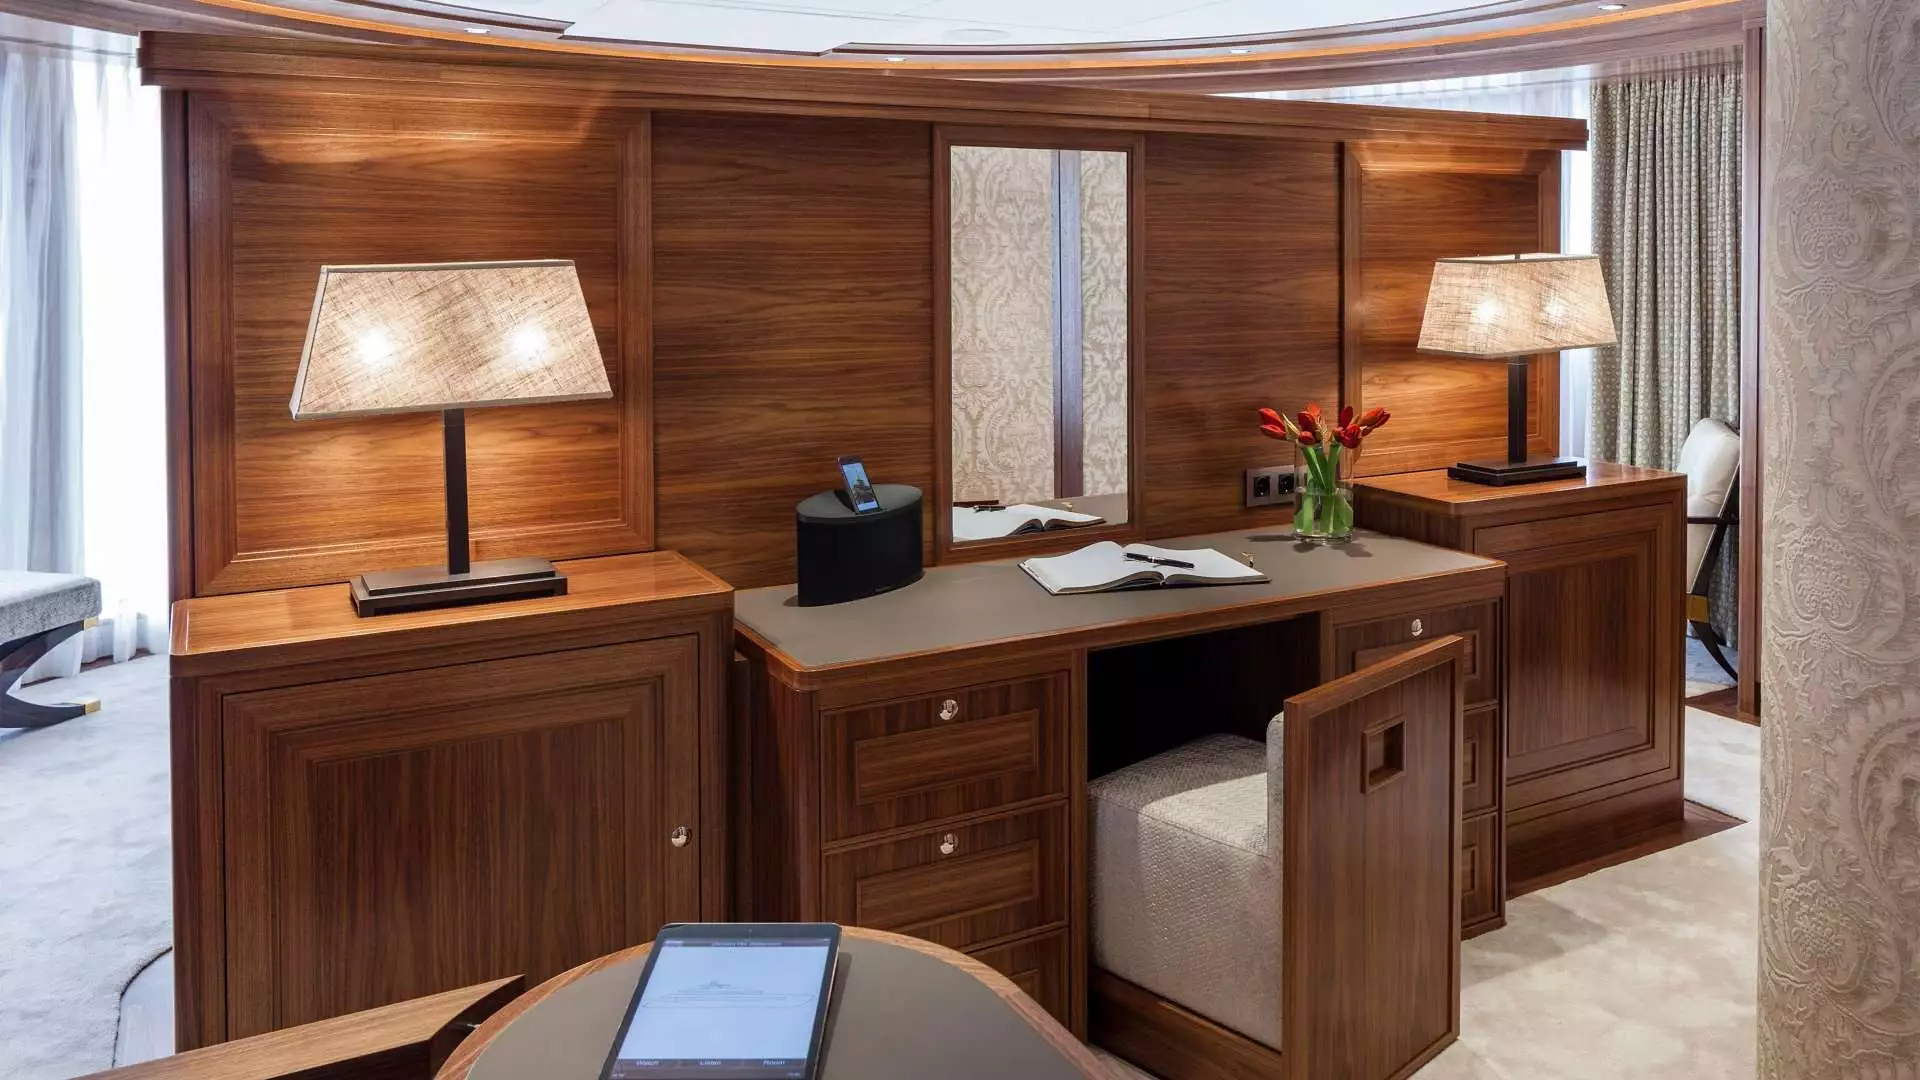 Heesen Yacht ARES interior 